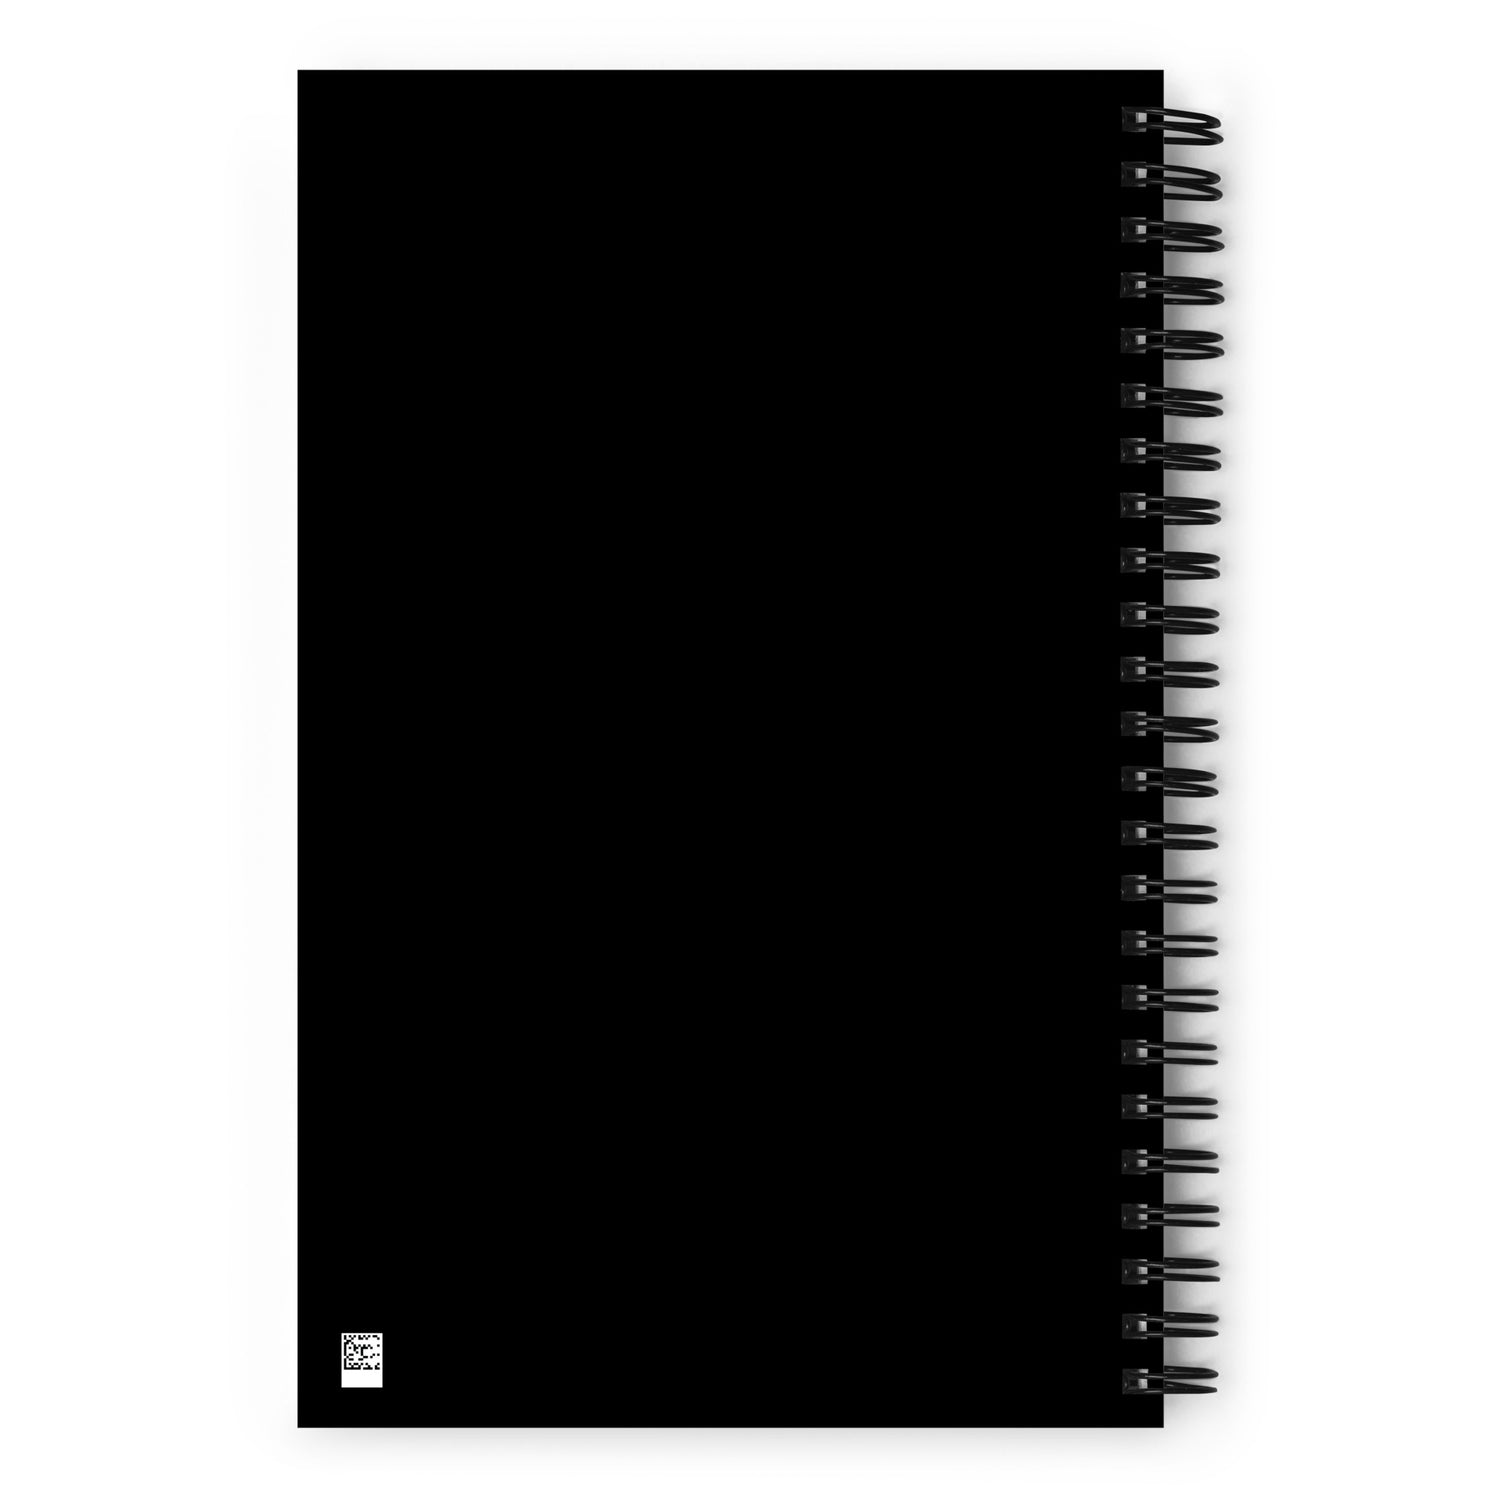 Spiral notebook